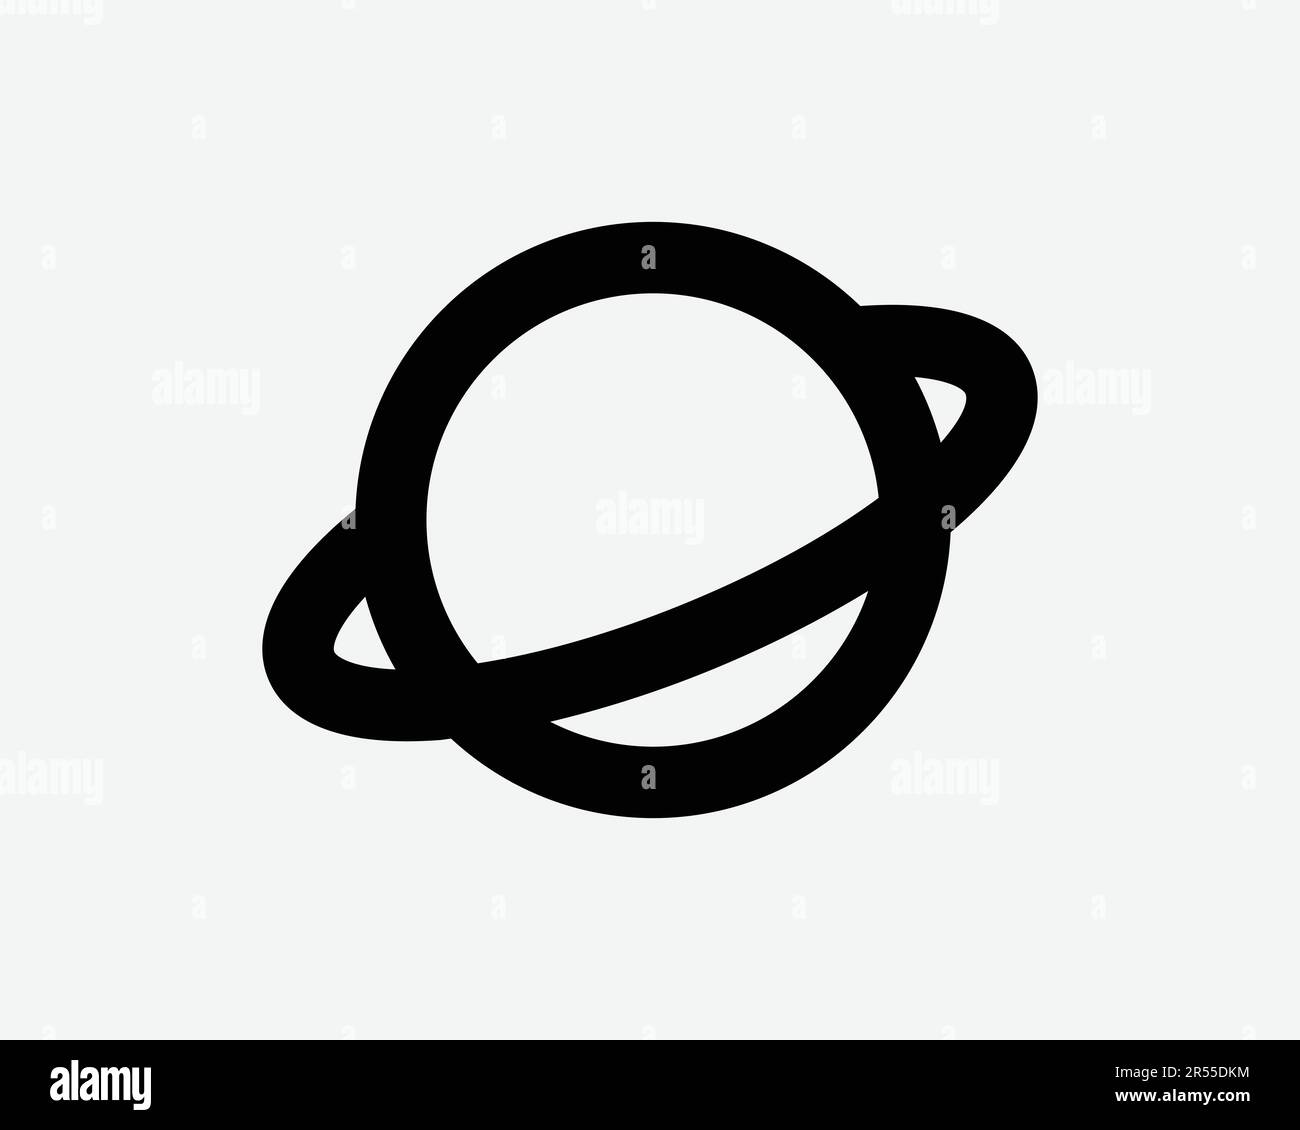 Planet Icon Solar System Astronomy Universe Saturn Jupiter Uranus Neptune Ring Space Sign Symbol Black Artwork Graphic Illustration Clipart EPS Vector Stock Vector